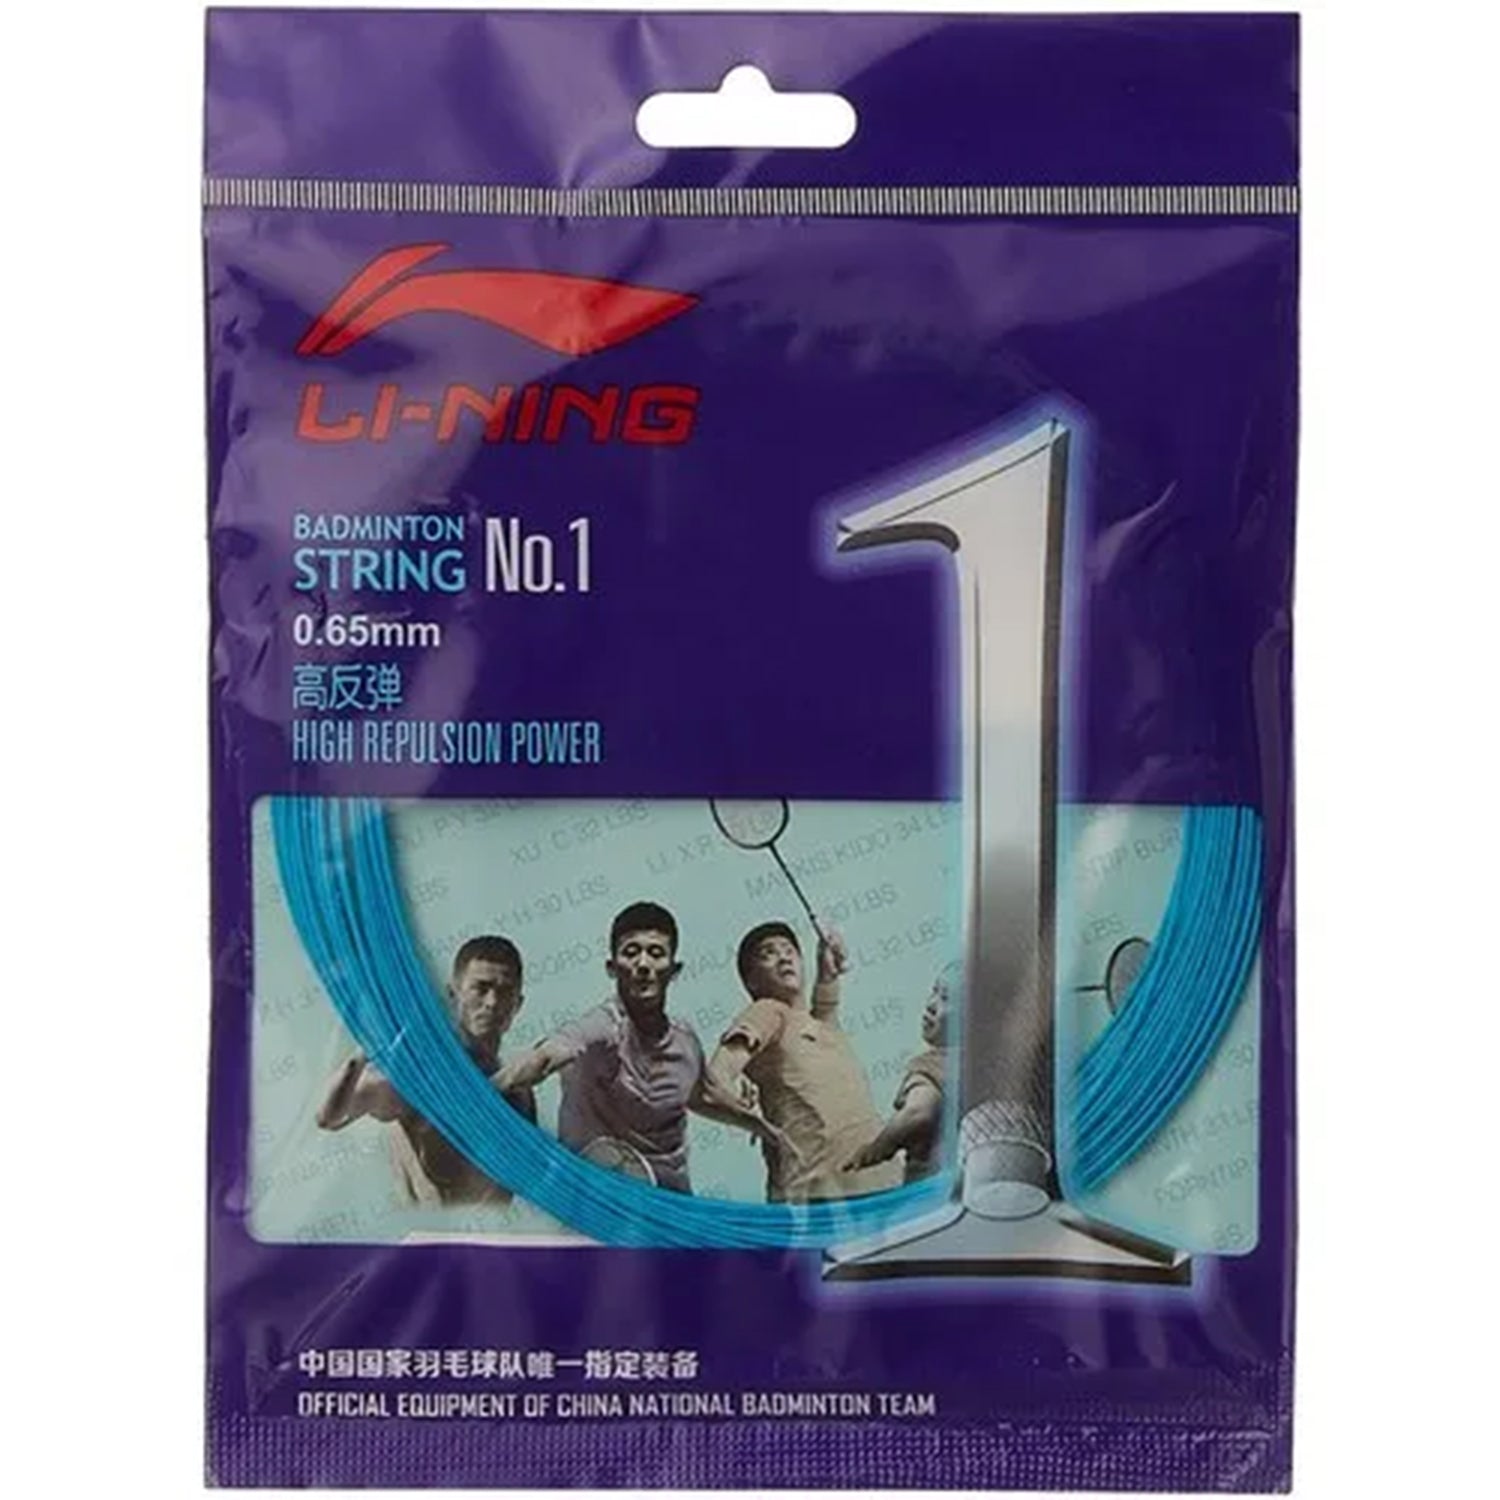 Li-Ning No 1 Badminton String 0.65mm - Best Price online Prokicksports.com